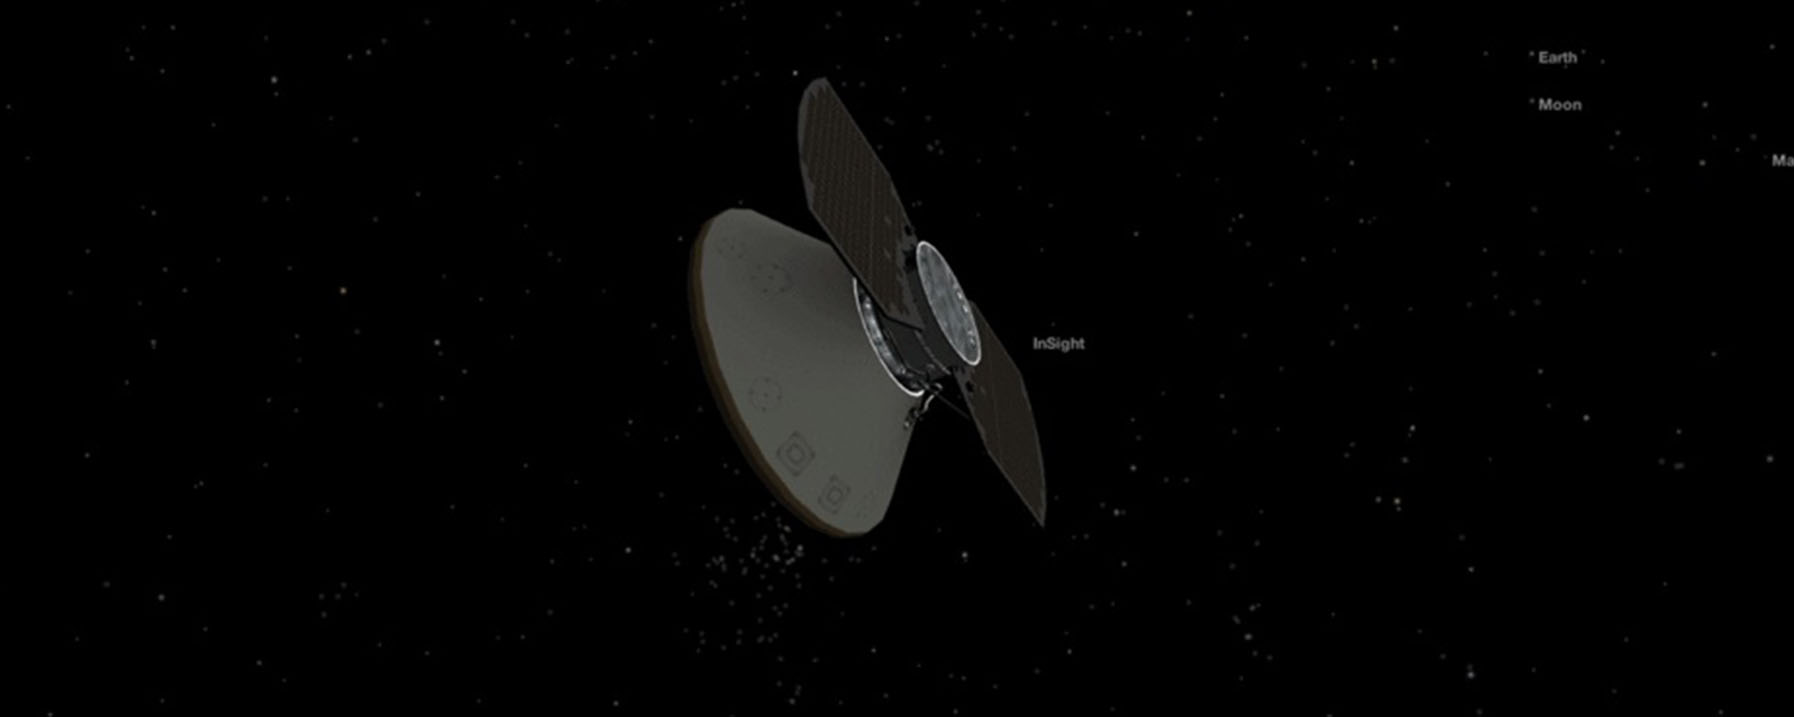 Illustration of NASA's InSight Spacecraft